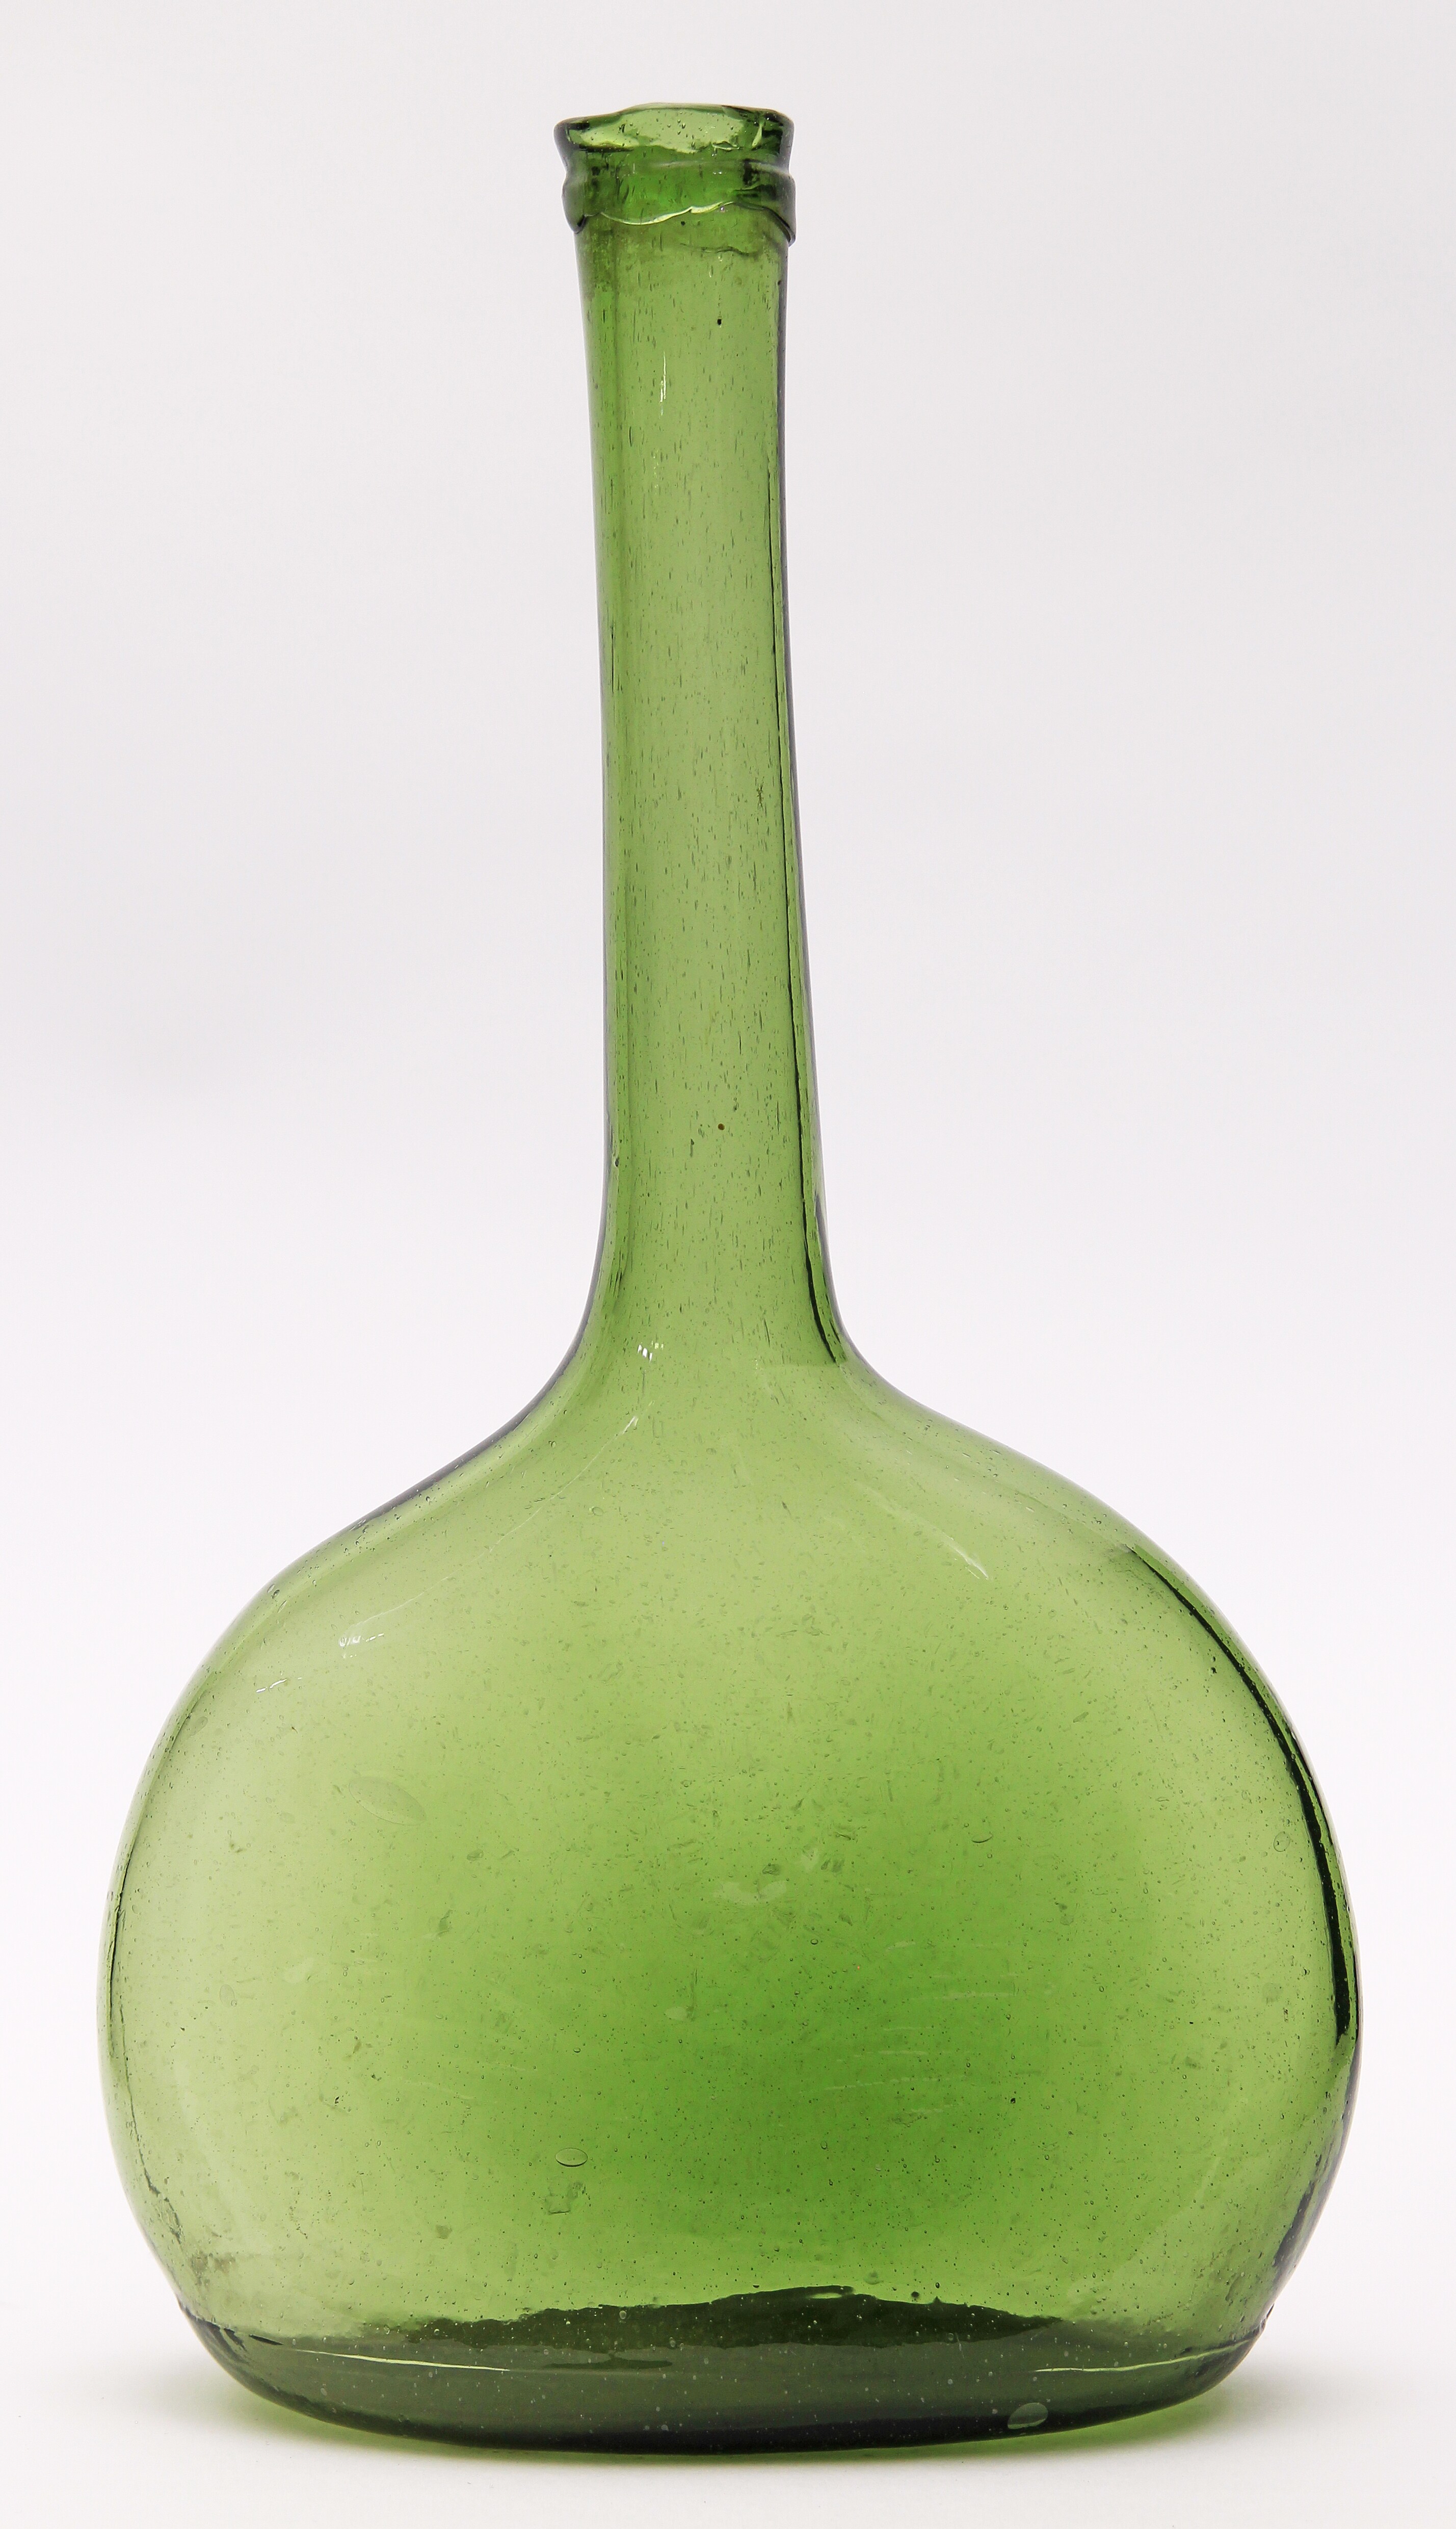 Standflasche aus grünem Glas (Stiftung Stadtmuseum Berlin CC BY-NC-SA)